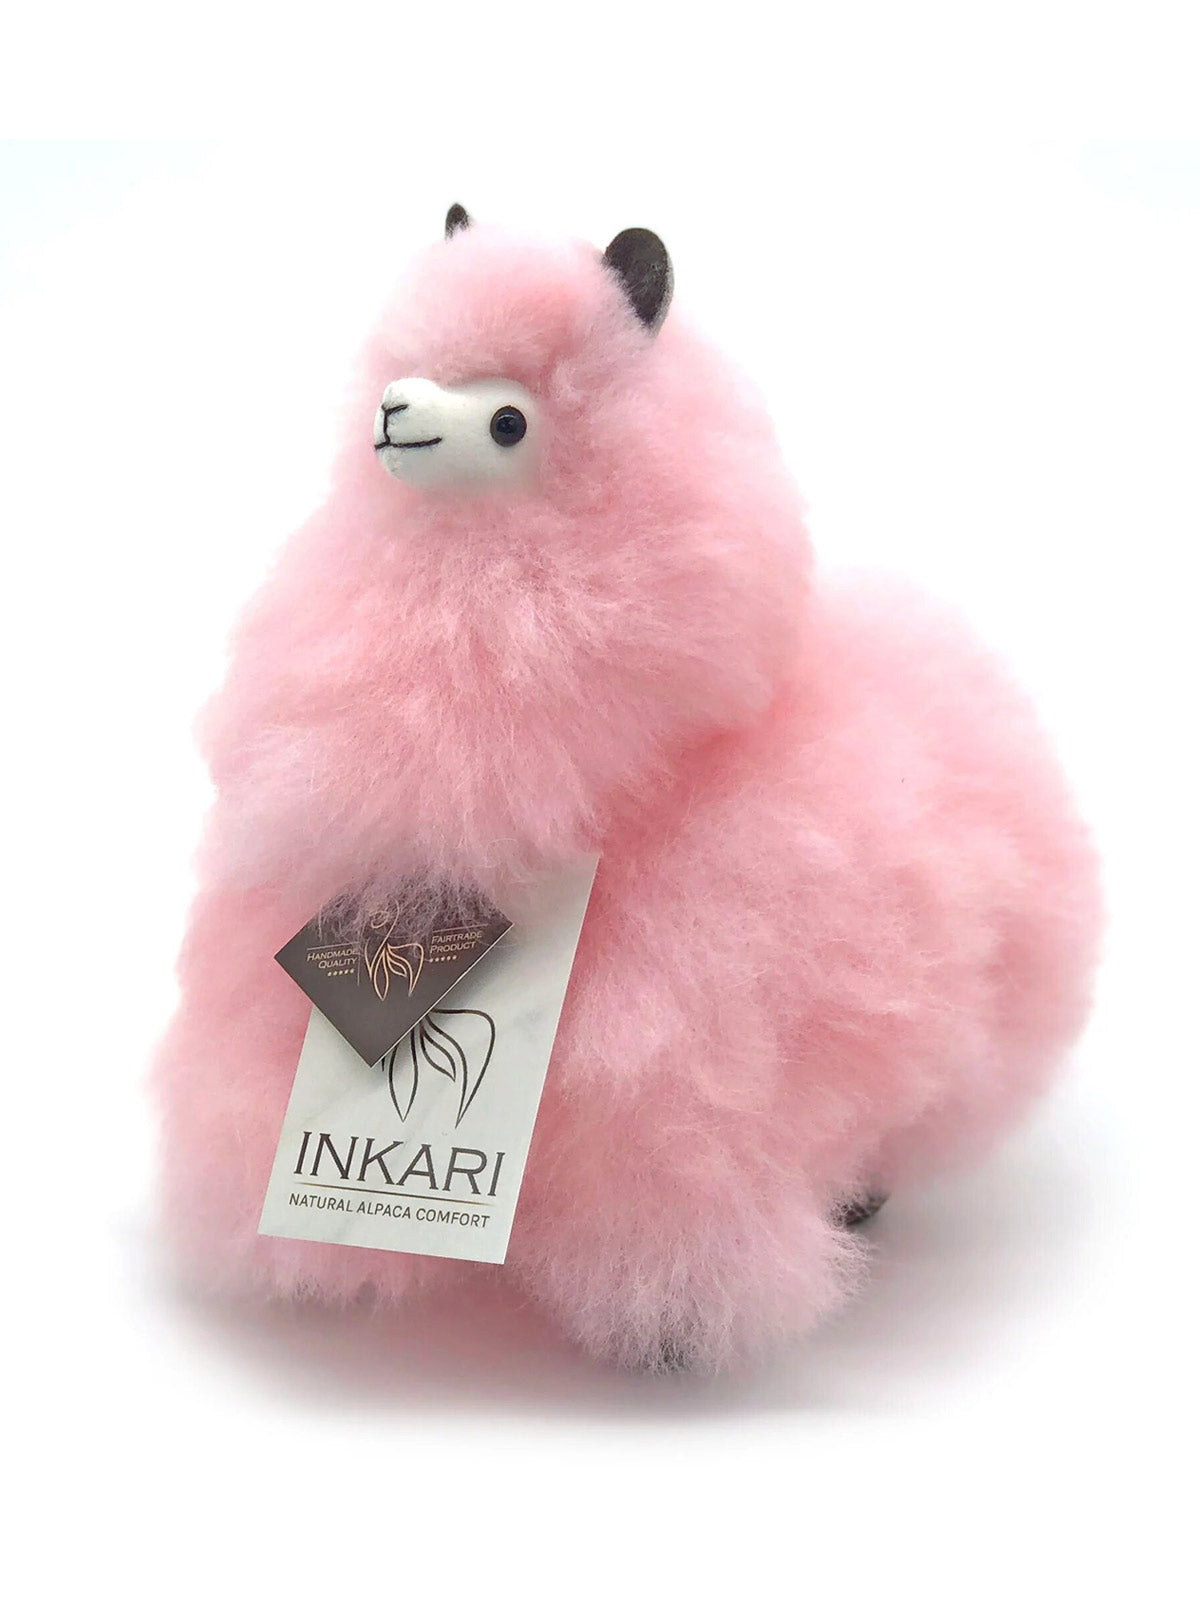 Inkari Alpaca soft toy-Rainbows-COTTON CANDY-Medium 32cm